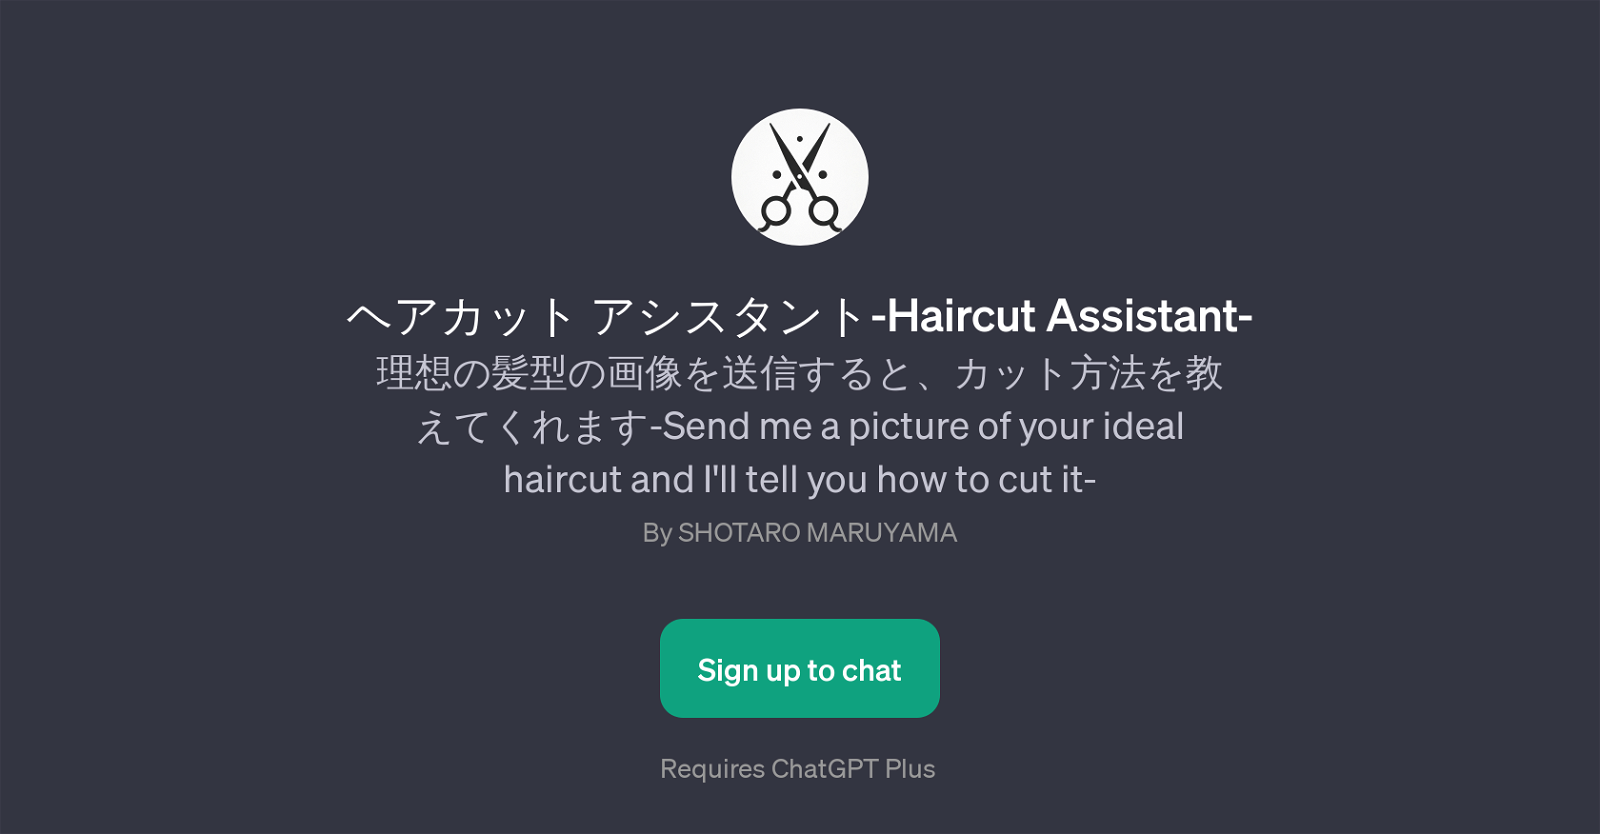 Haircut Assistant website